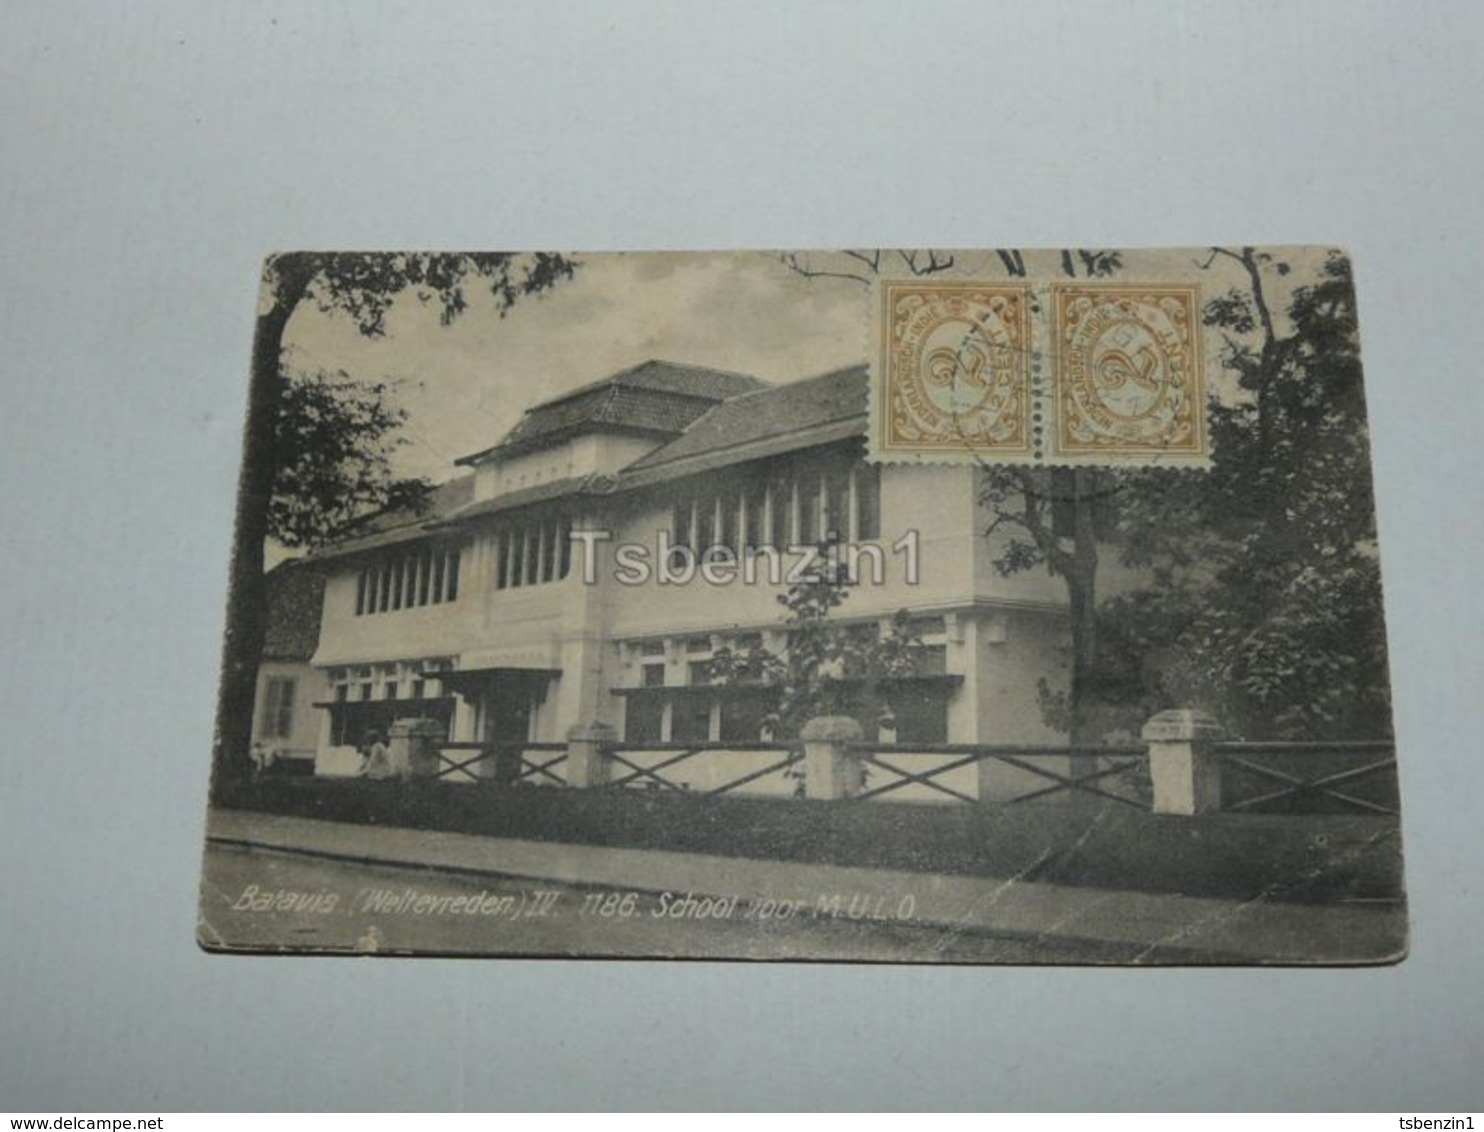 Batavia (Welterreden) IV. 1186 School Voor M.U.L.O. Indonesia - Indonesia